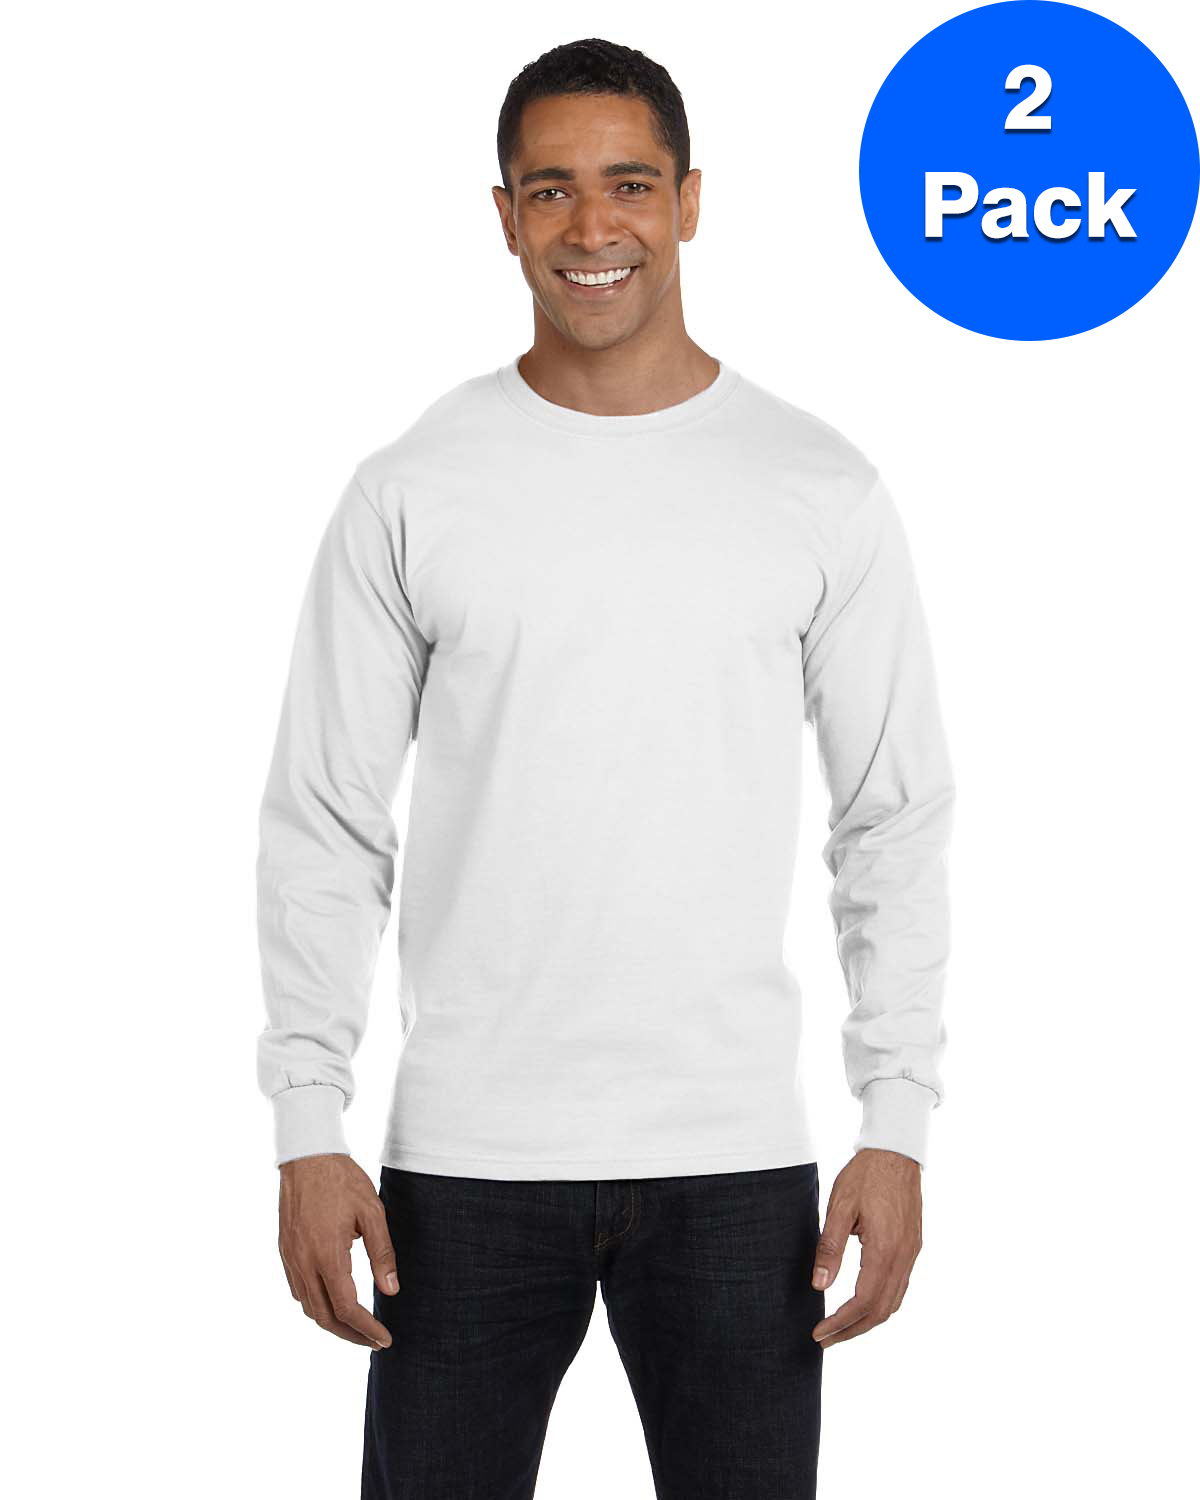 Mens 5.2 oz. ComfortSoft Cotton Long-Sleeve T-Shirt 5286 (2 PACK) - image 1 of 3